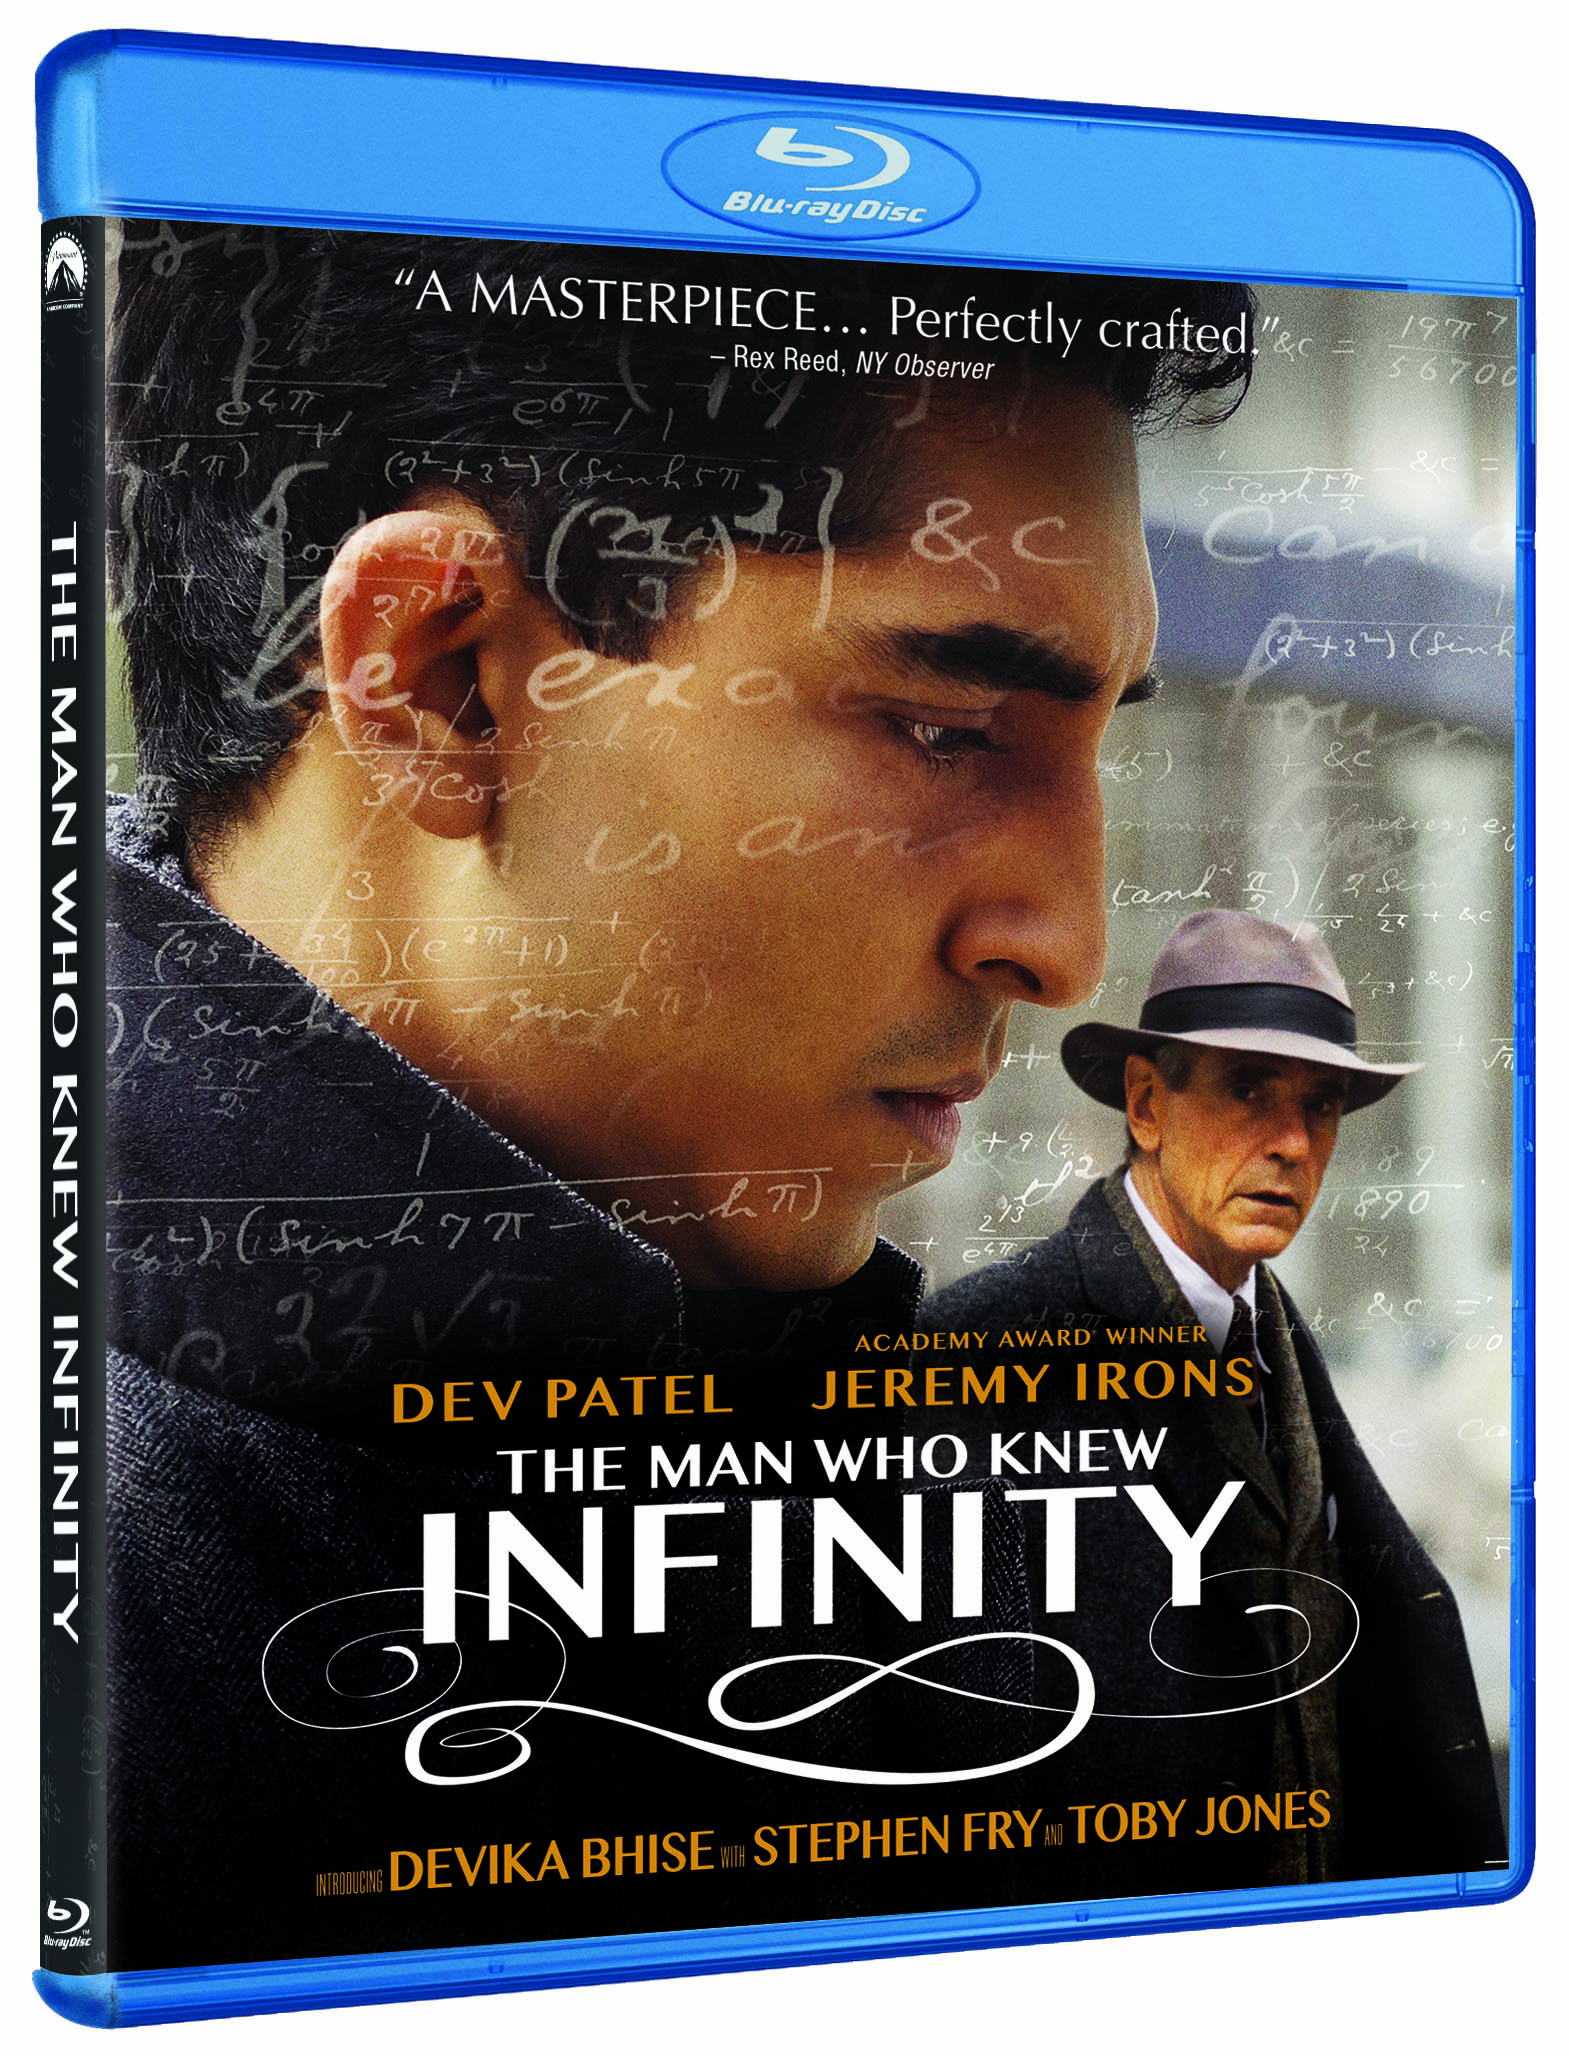 The Man Who Knew Infinity English Telugu Movie Download 720p Hd